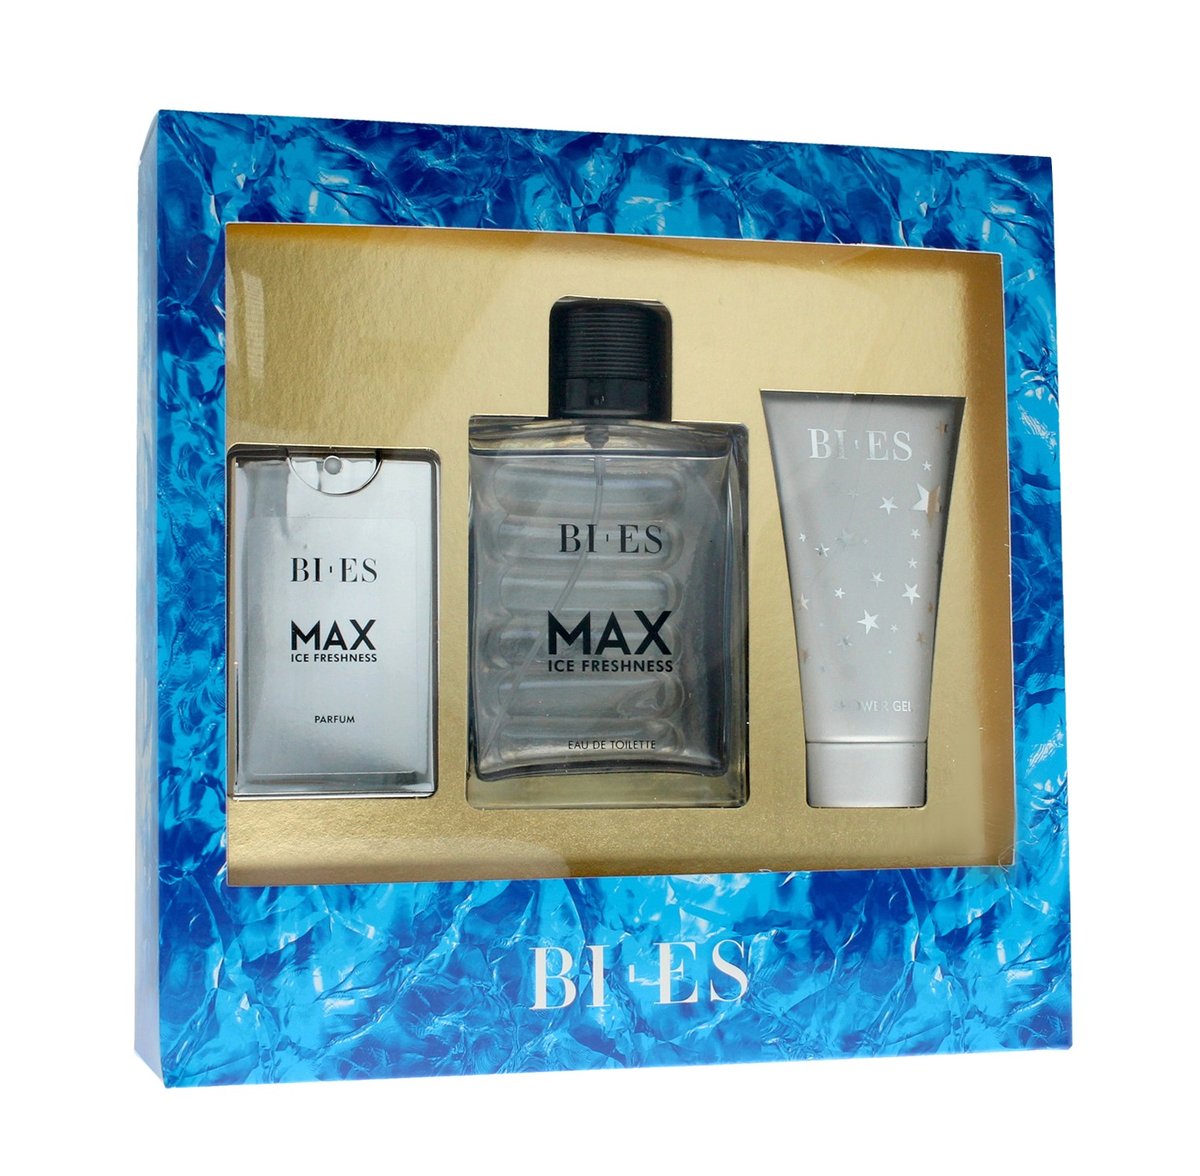 Bi-es Max Ice Freshness Komplet edt 100ml + parfum 15ml + żel pod prysznic 50ml) 165ml